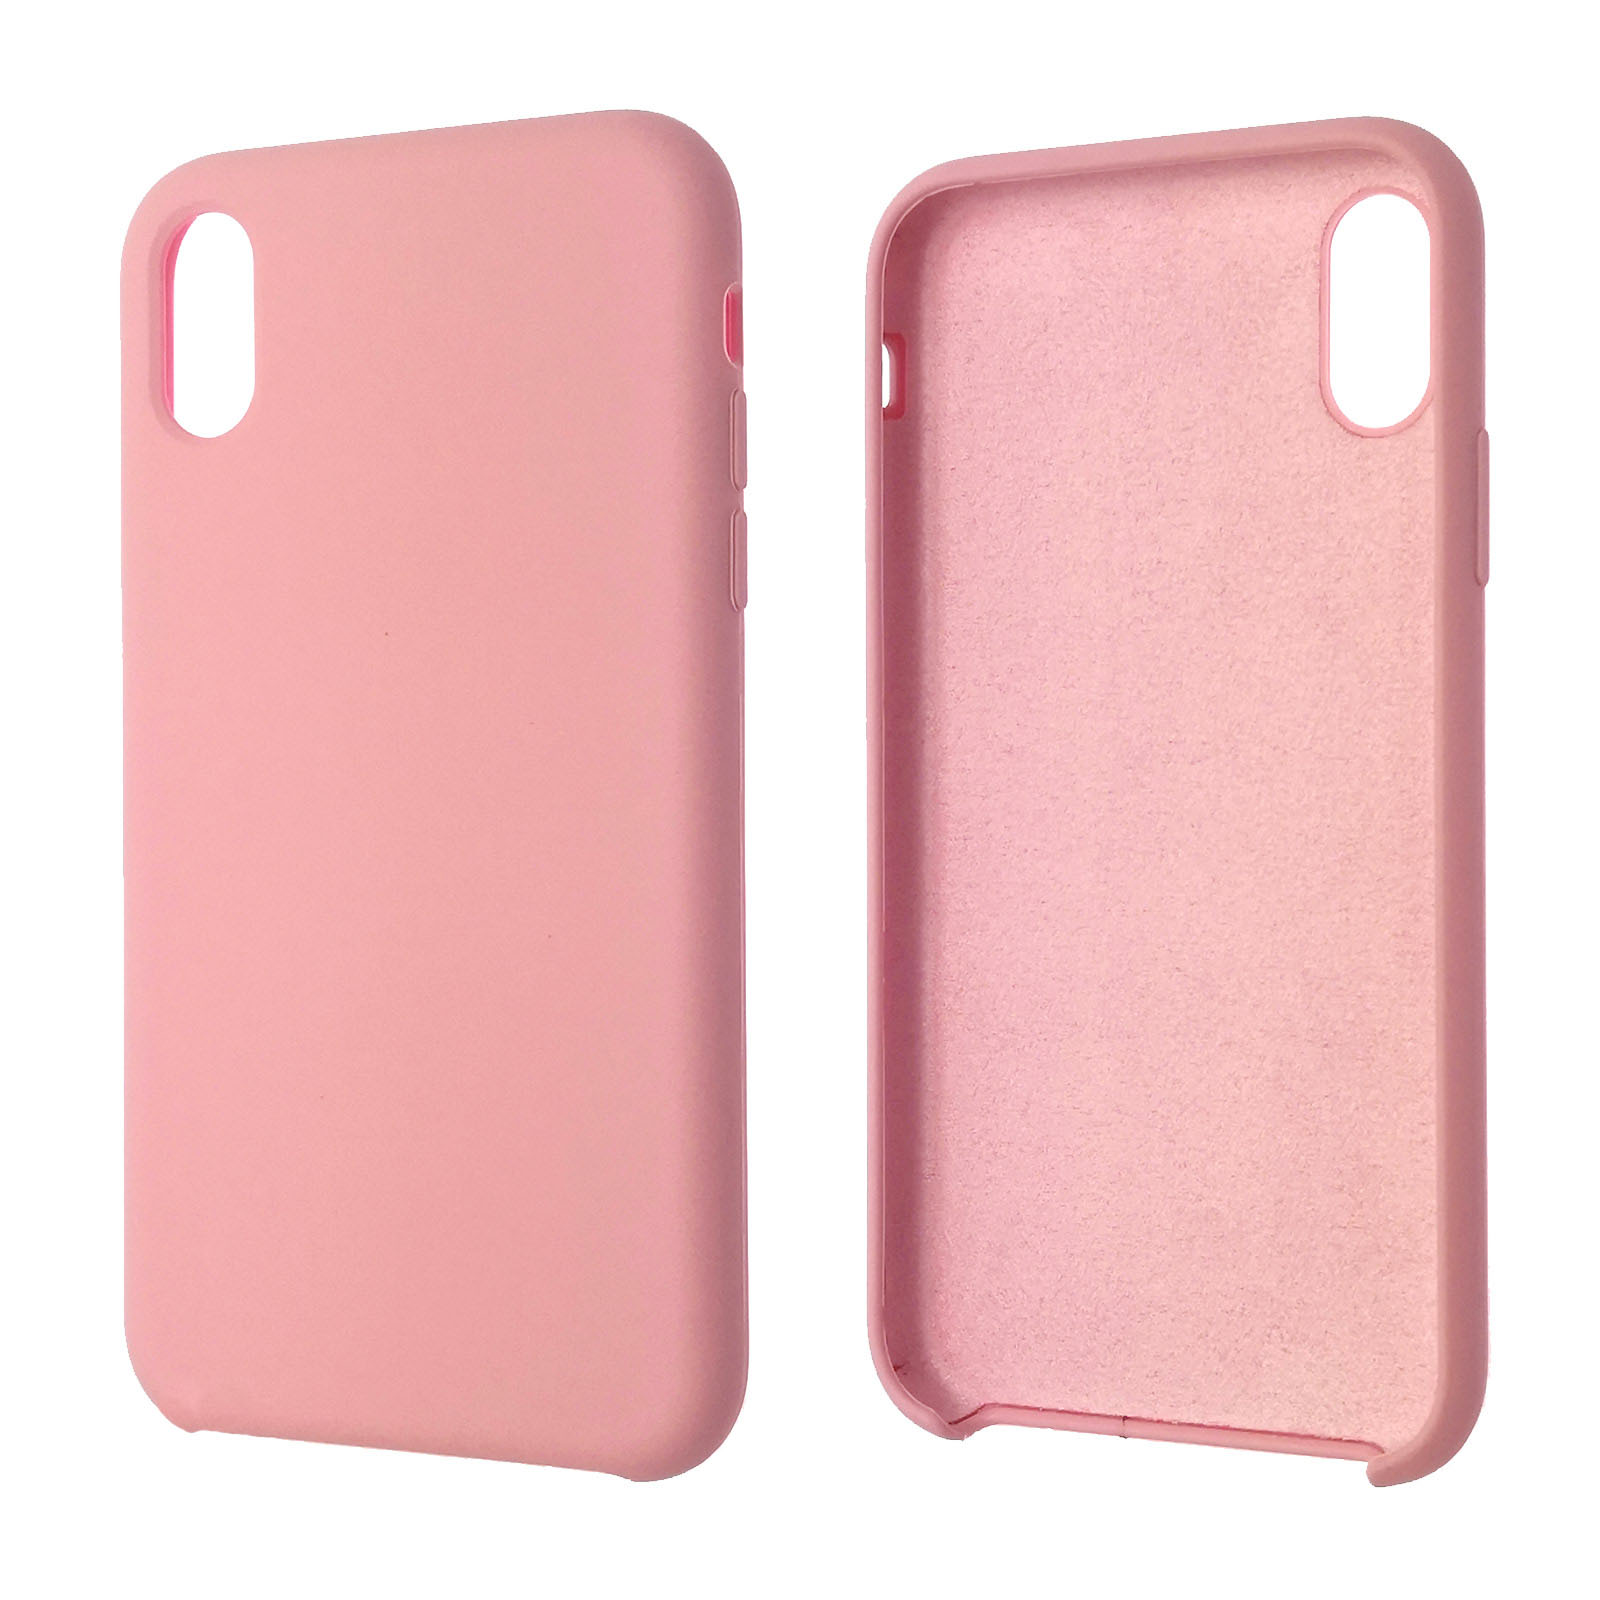 Чехол накладка Silicon Case для APPLE iPhone XR, силикон, бархат, цвет розовый.